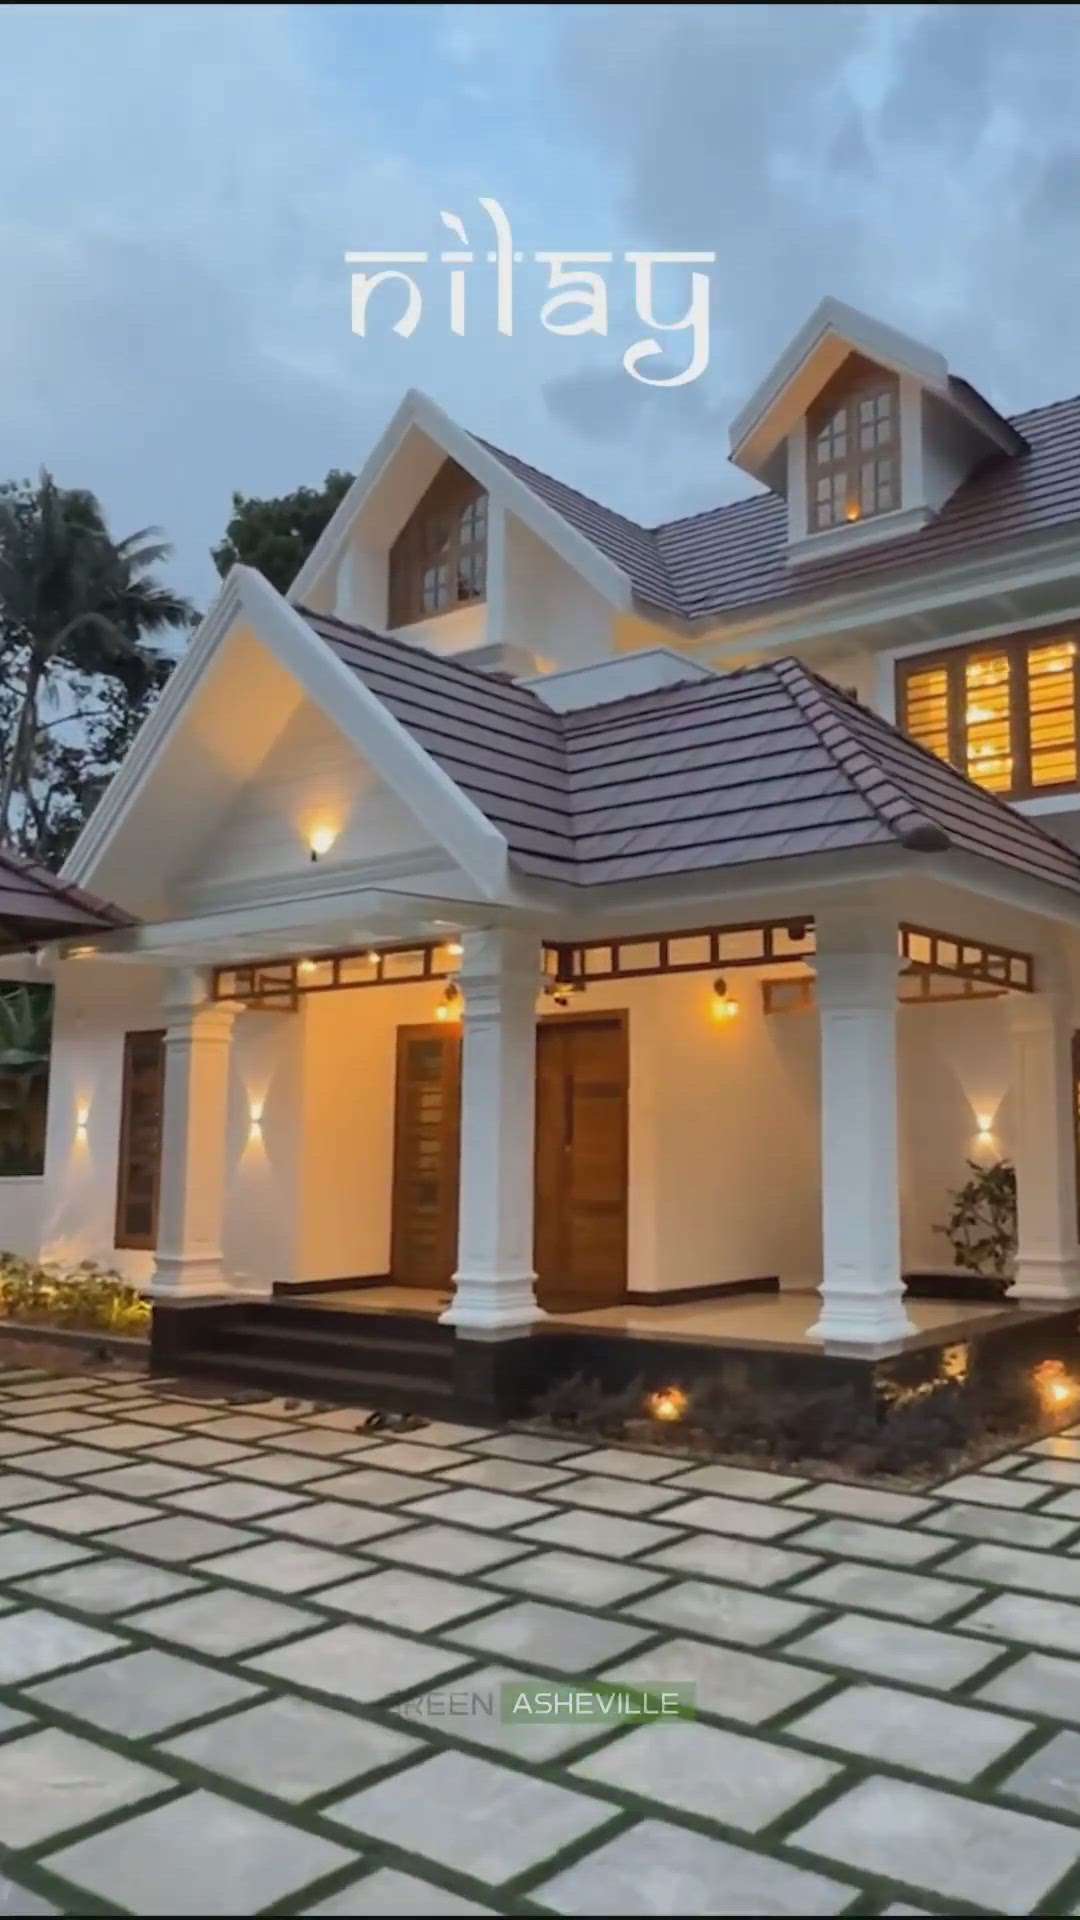 "NILAY" | Modern Traditional Fusion Home

2850 Sq. Ft 
4 BHK
Location: Arpookkara, Kottayam

Credits: Green asheville Architecture
@greenasheville